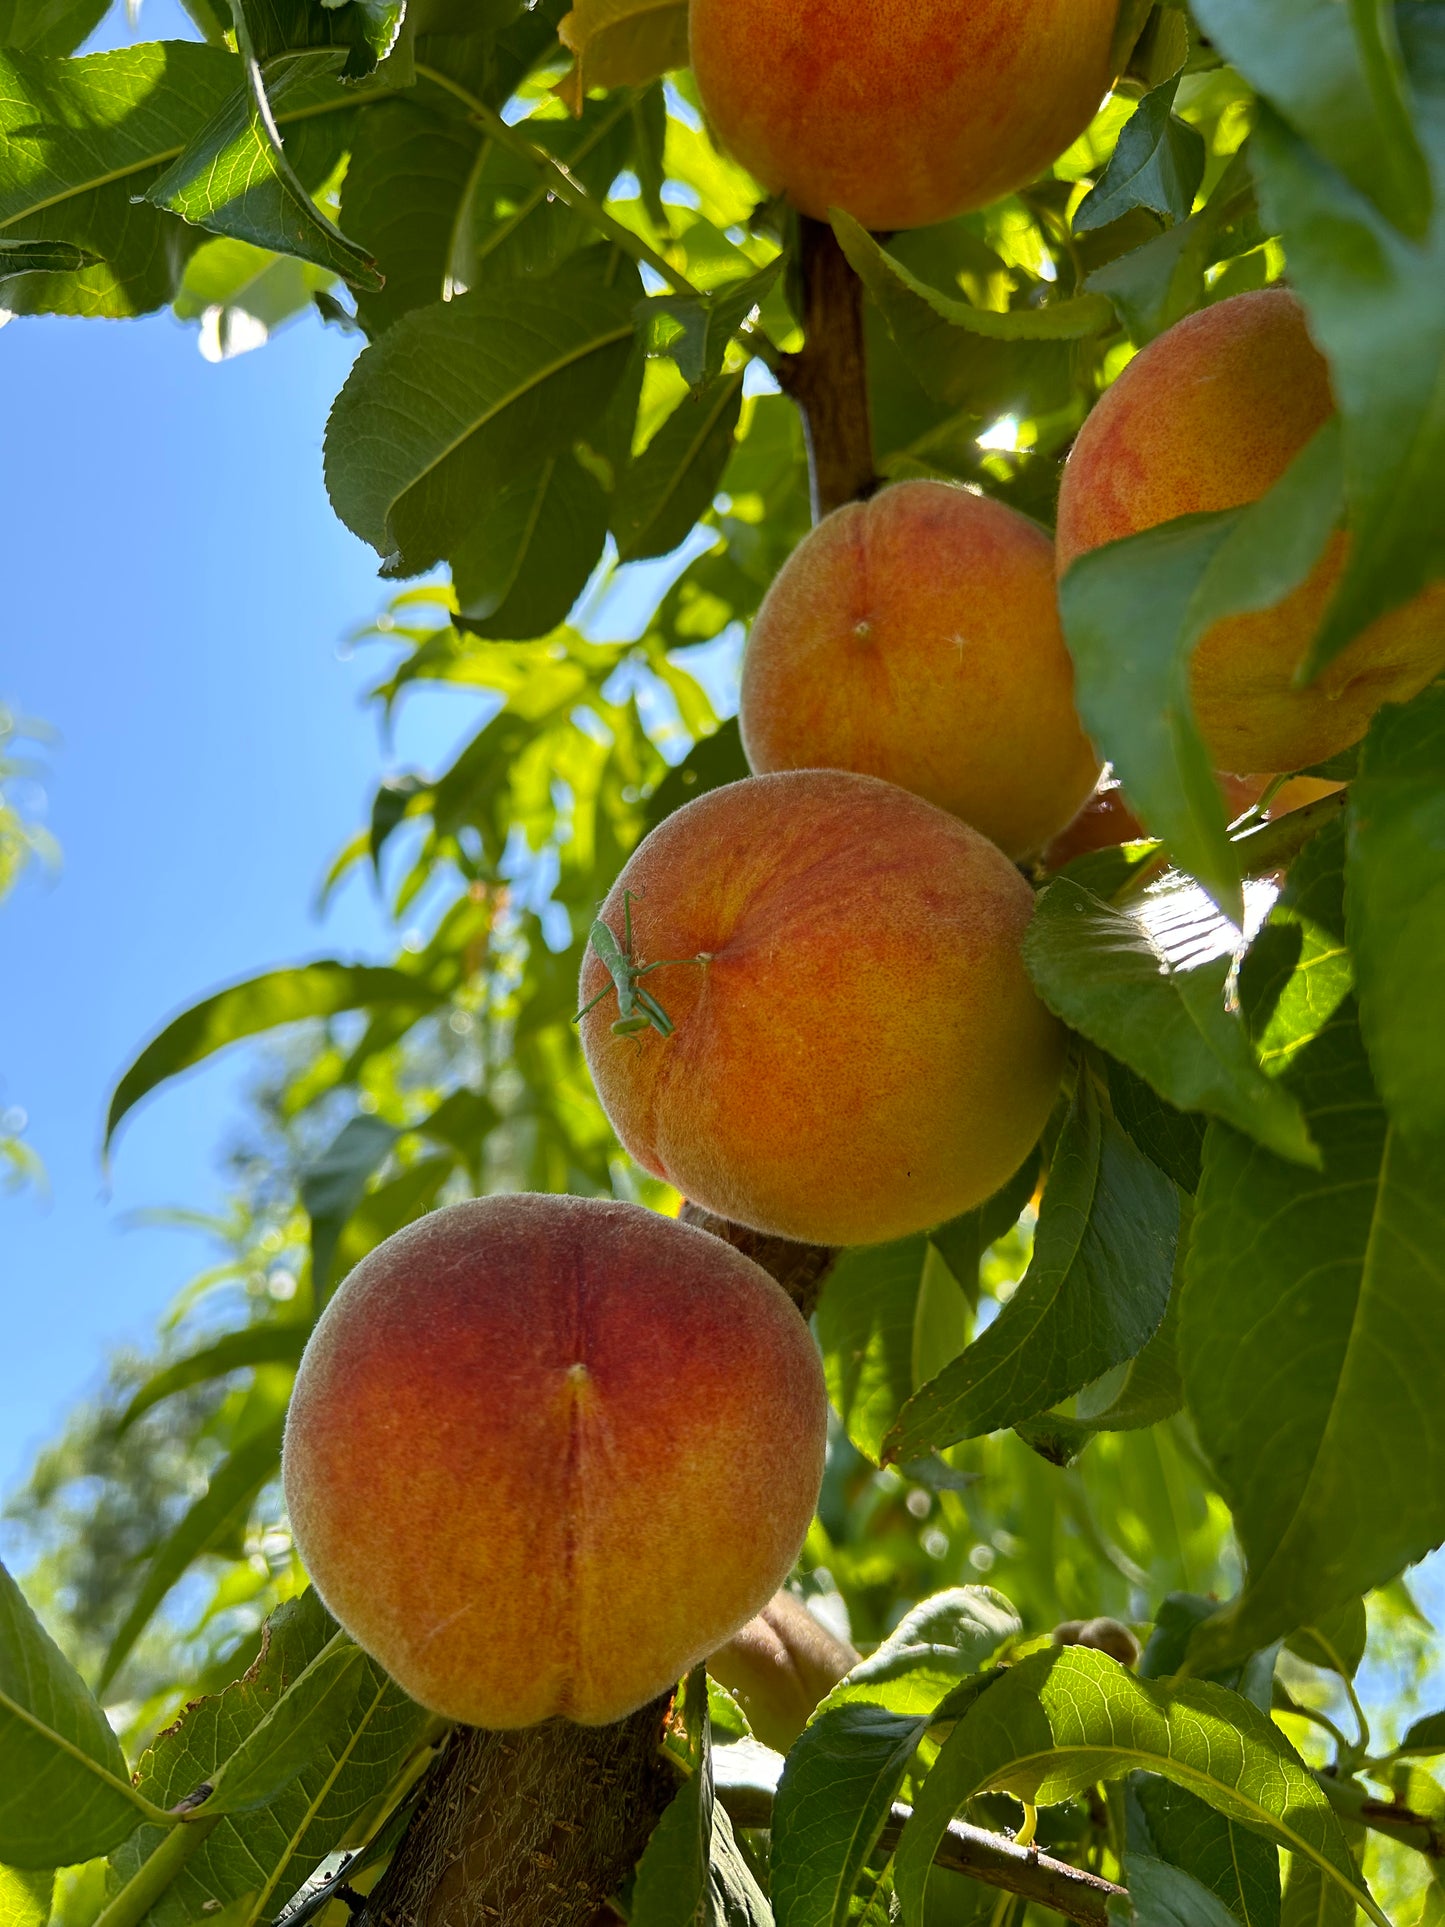 Ripe peaches used in Silver Leaf Farms Green Chile Peach Jam